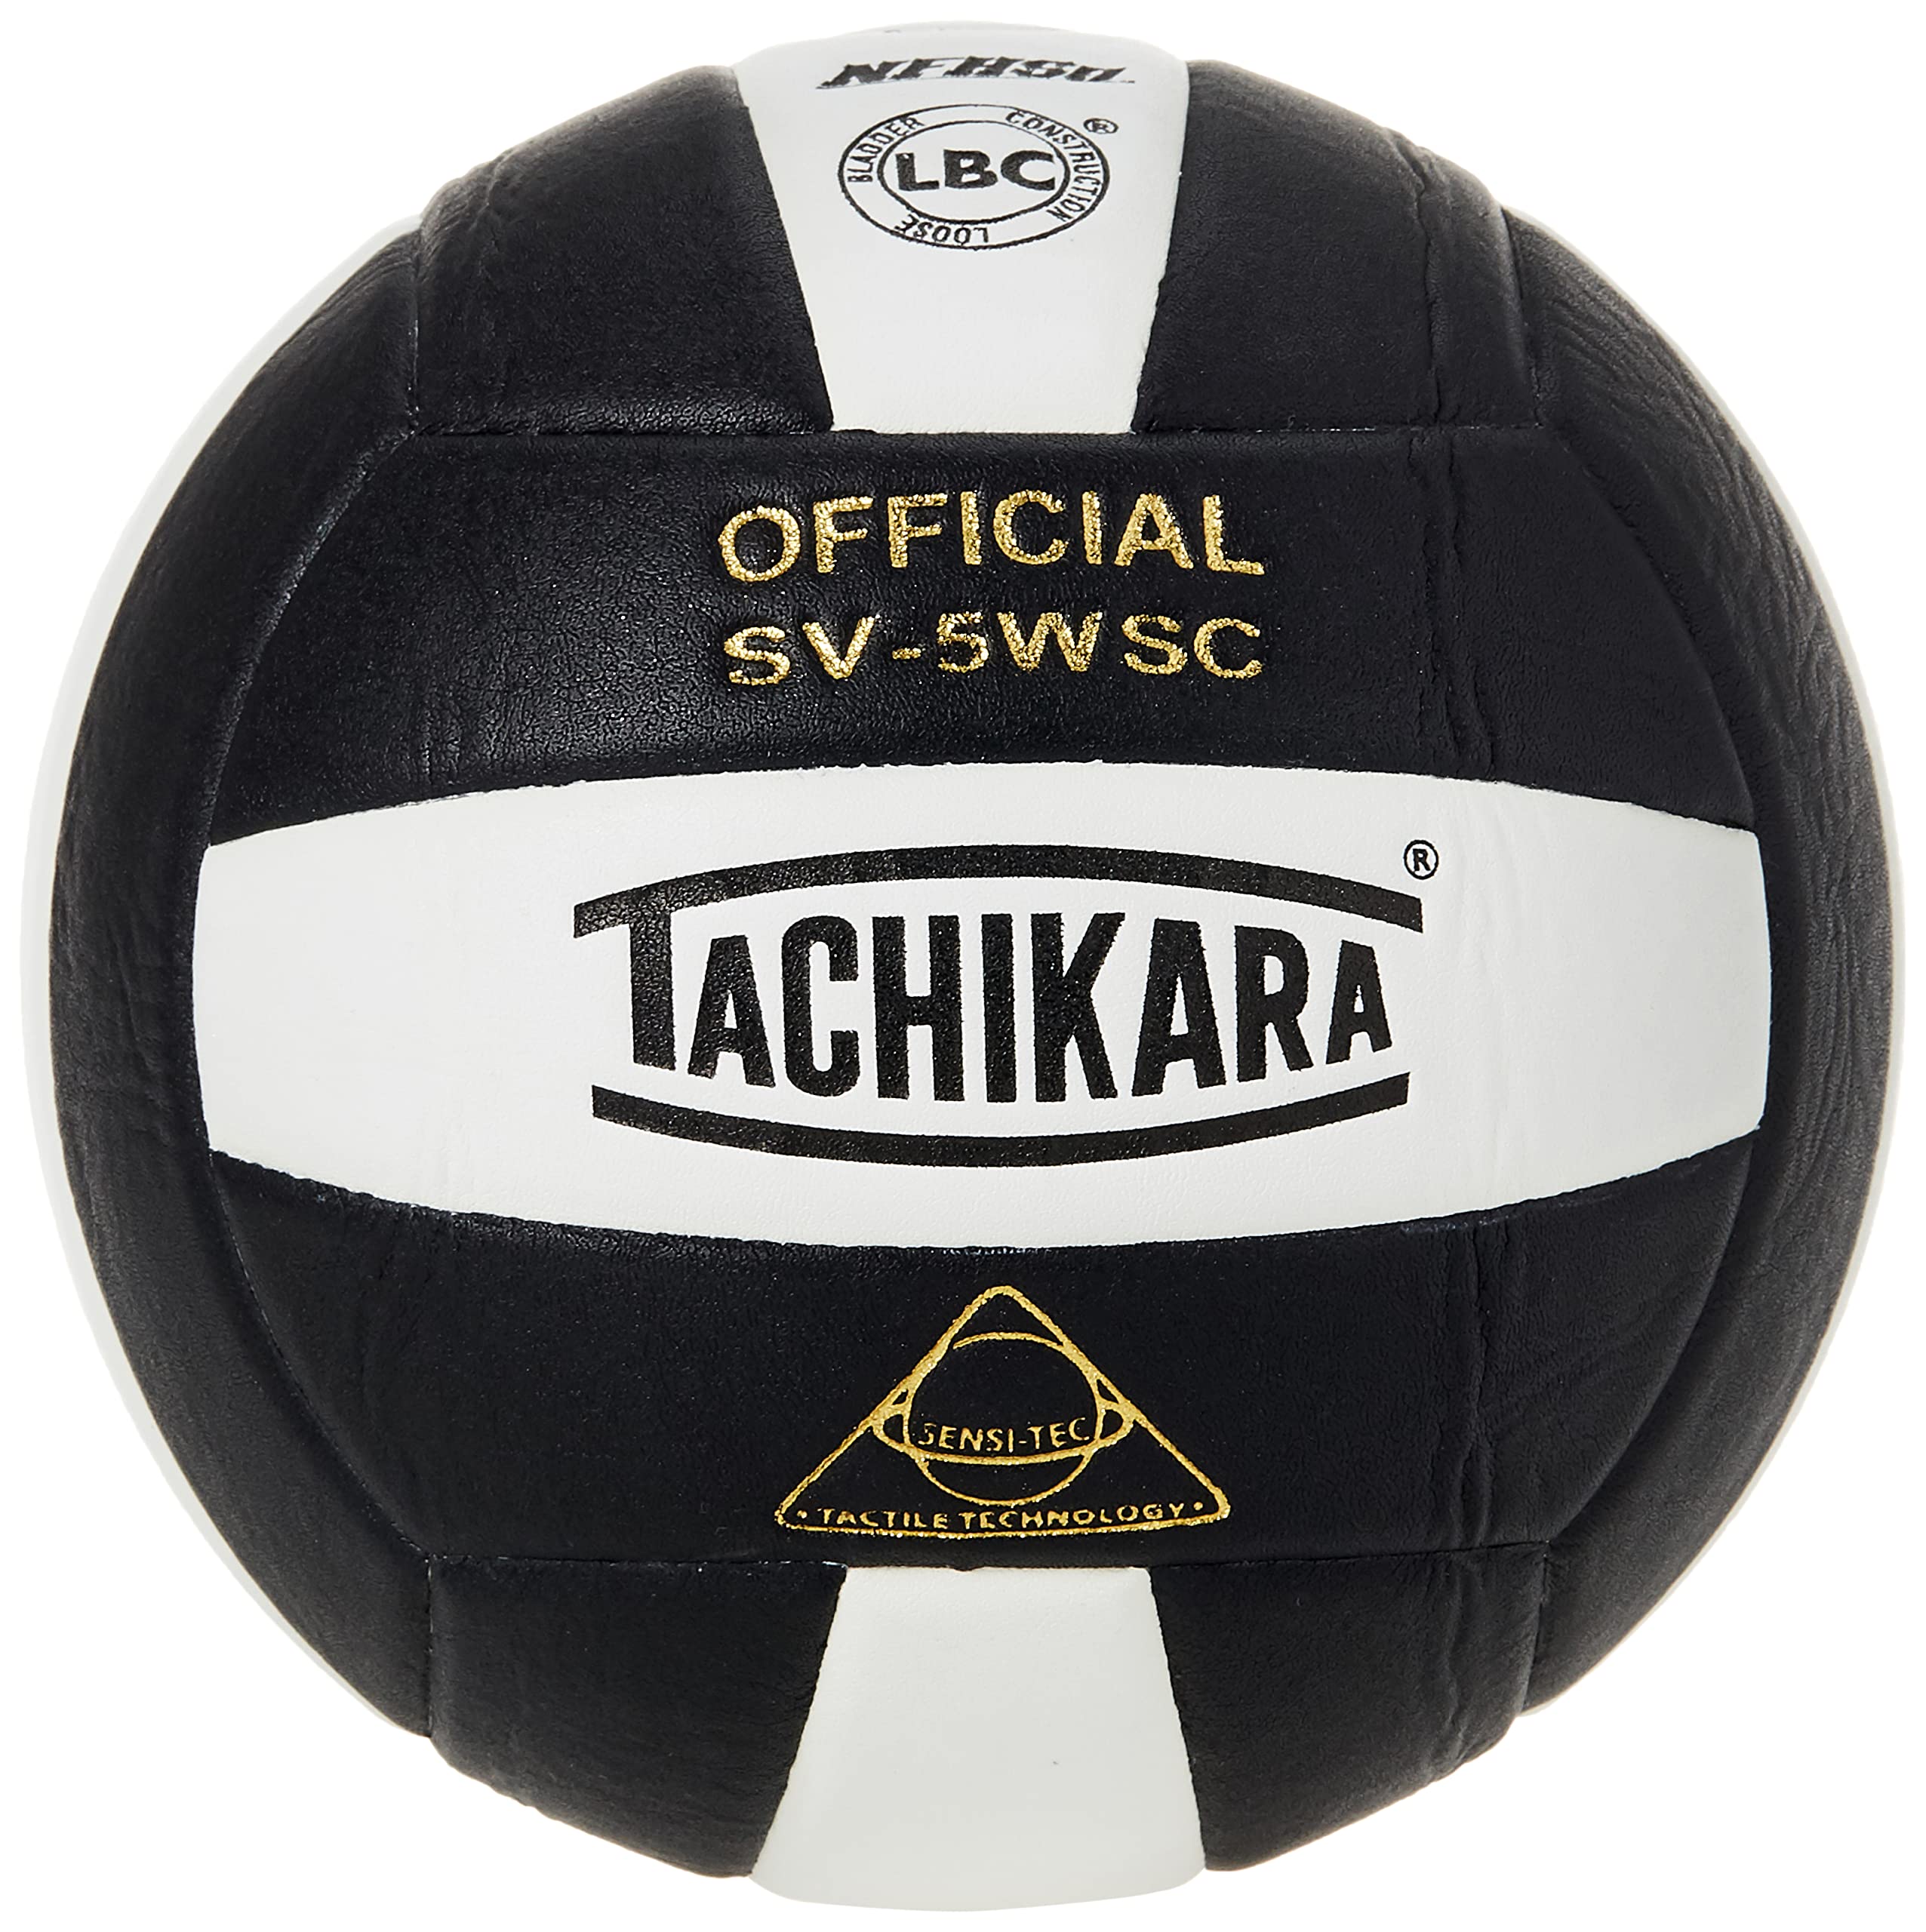 Tachikara Sensi-Tec コンポジット SV-5WSC バレーボール (EA)